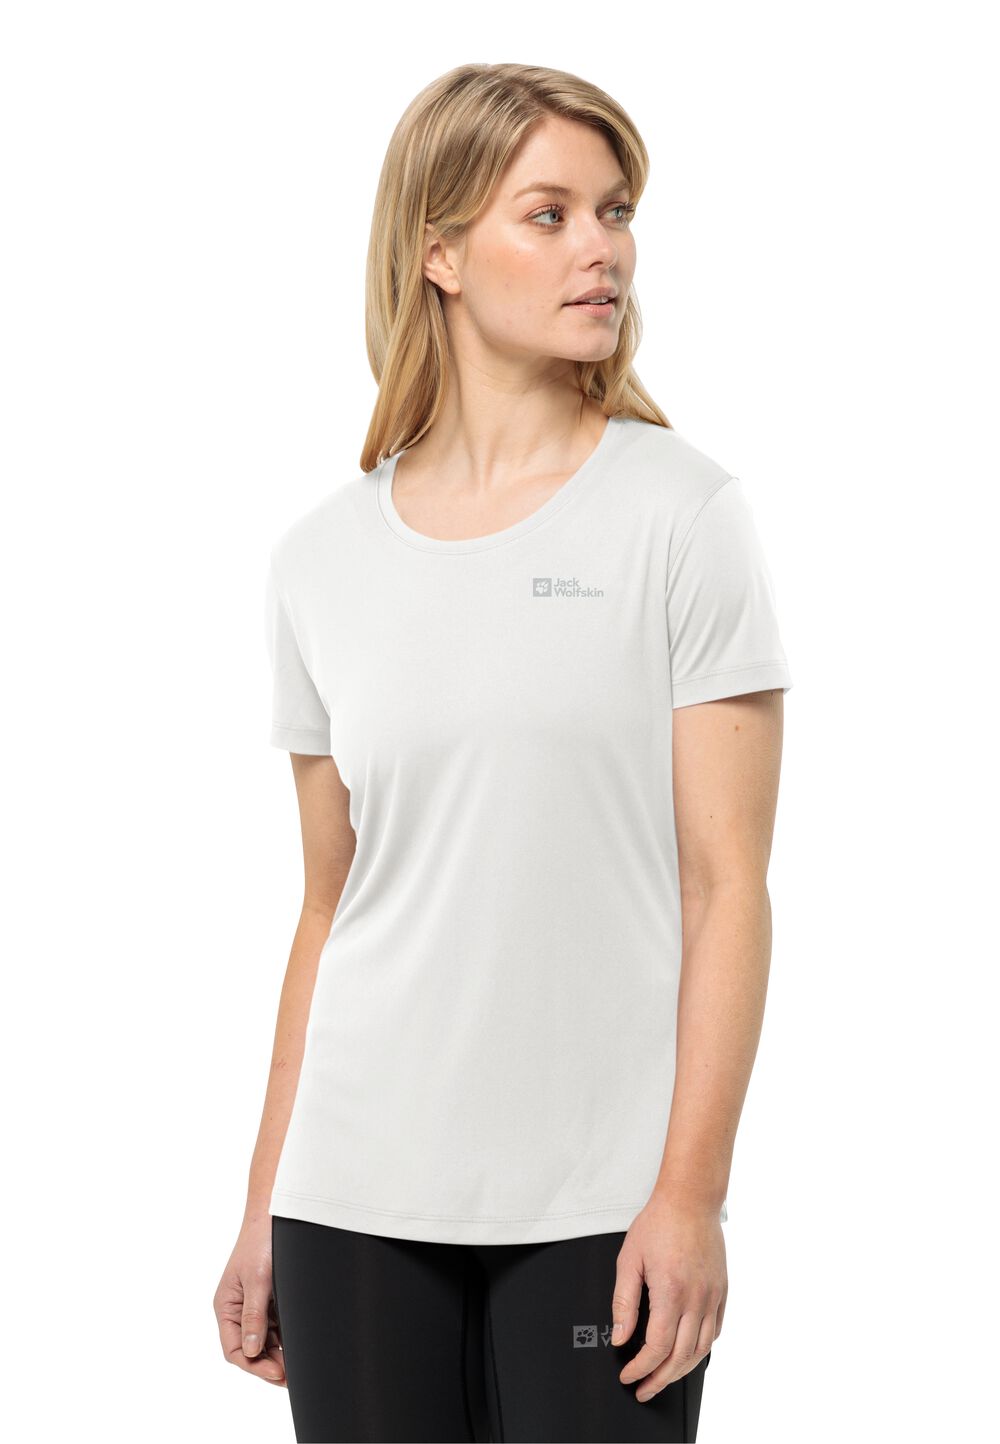 Jack Wolfskin Tech T-Shirt Women Functioneel shirt Dames XXL wit stark white